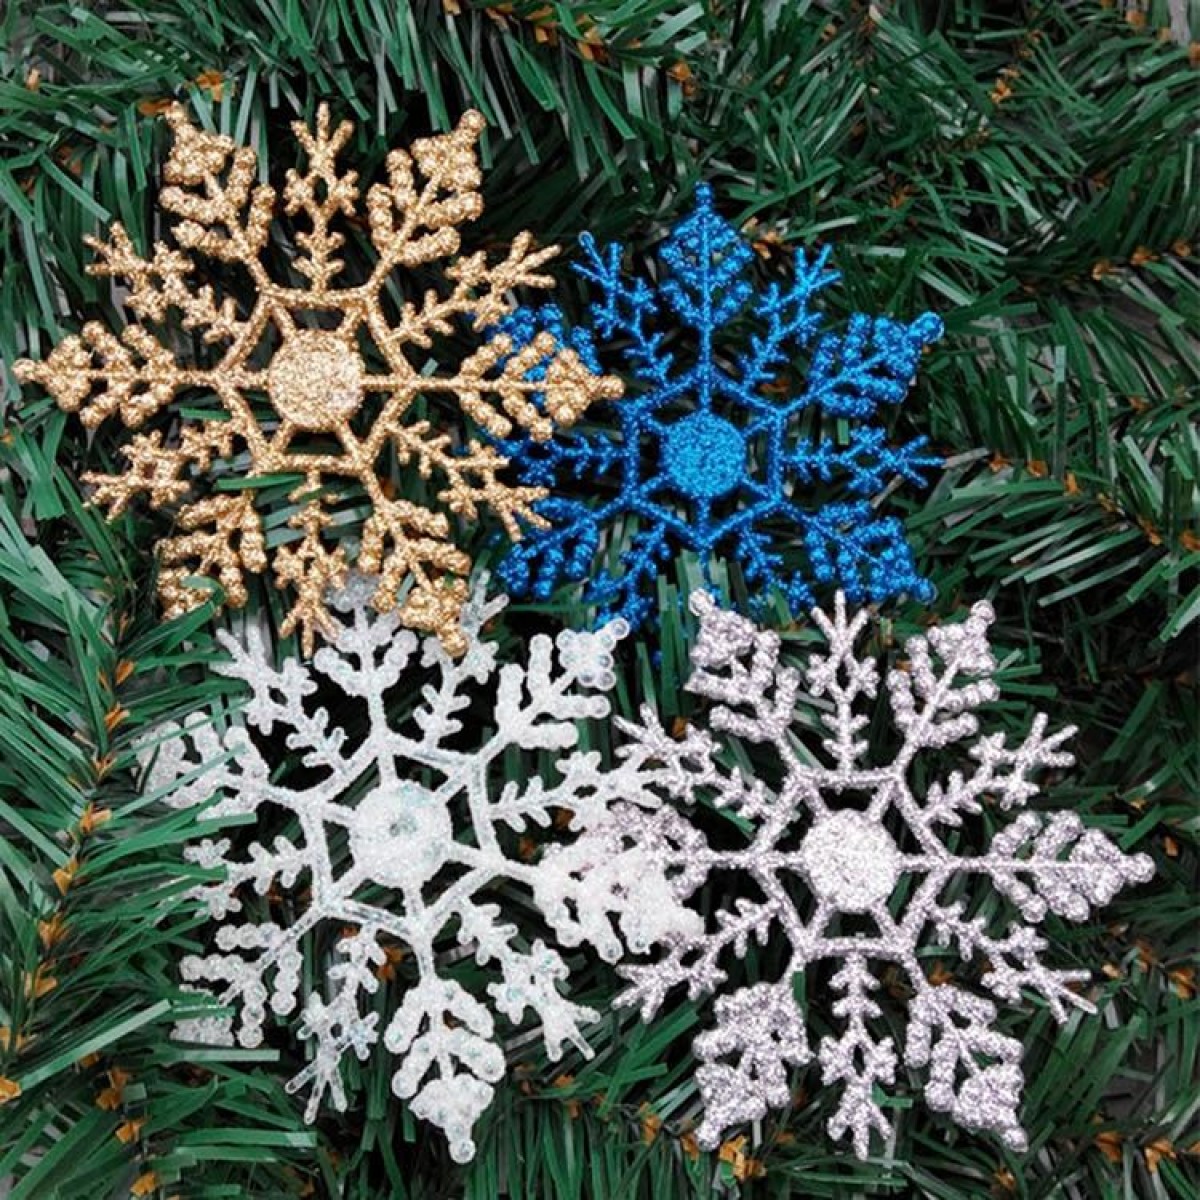 12 PCS Christmas Tree Ornaments Acrylic Snowflake Pieces Decorative Pendant Loose Powder, Diameter: 10cm(Gold)